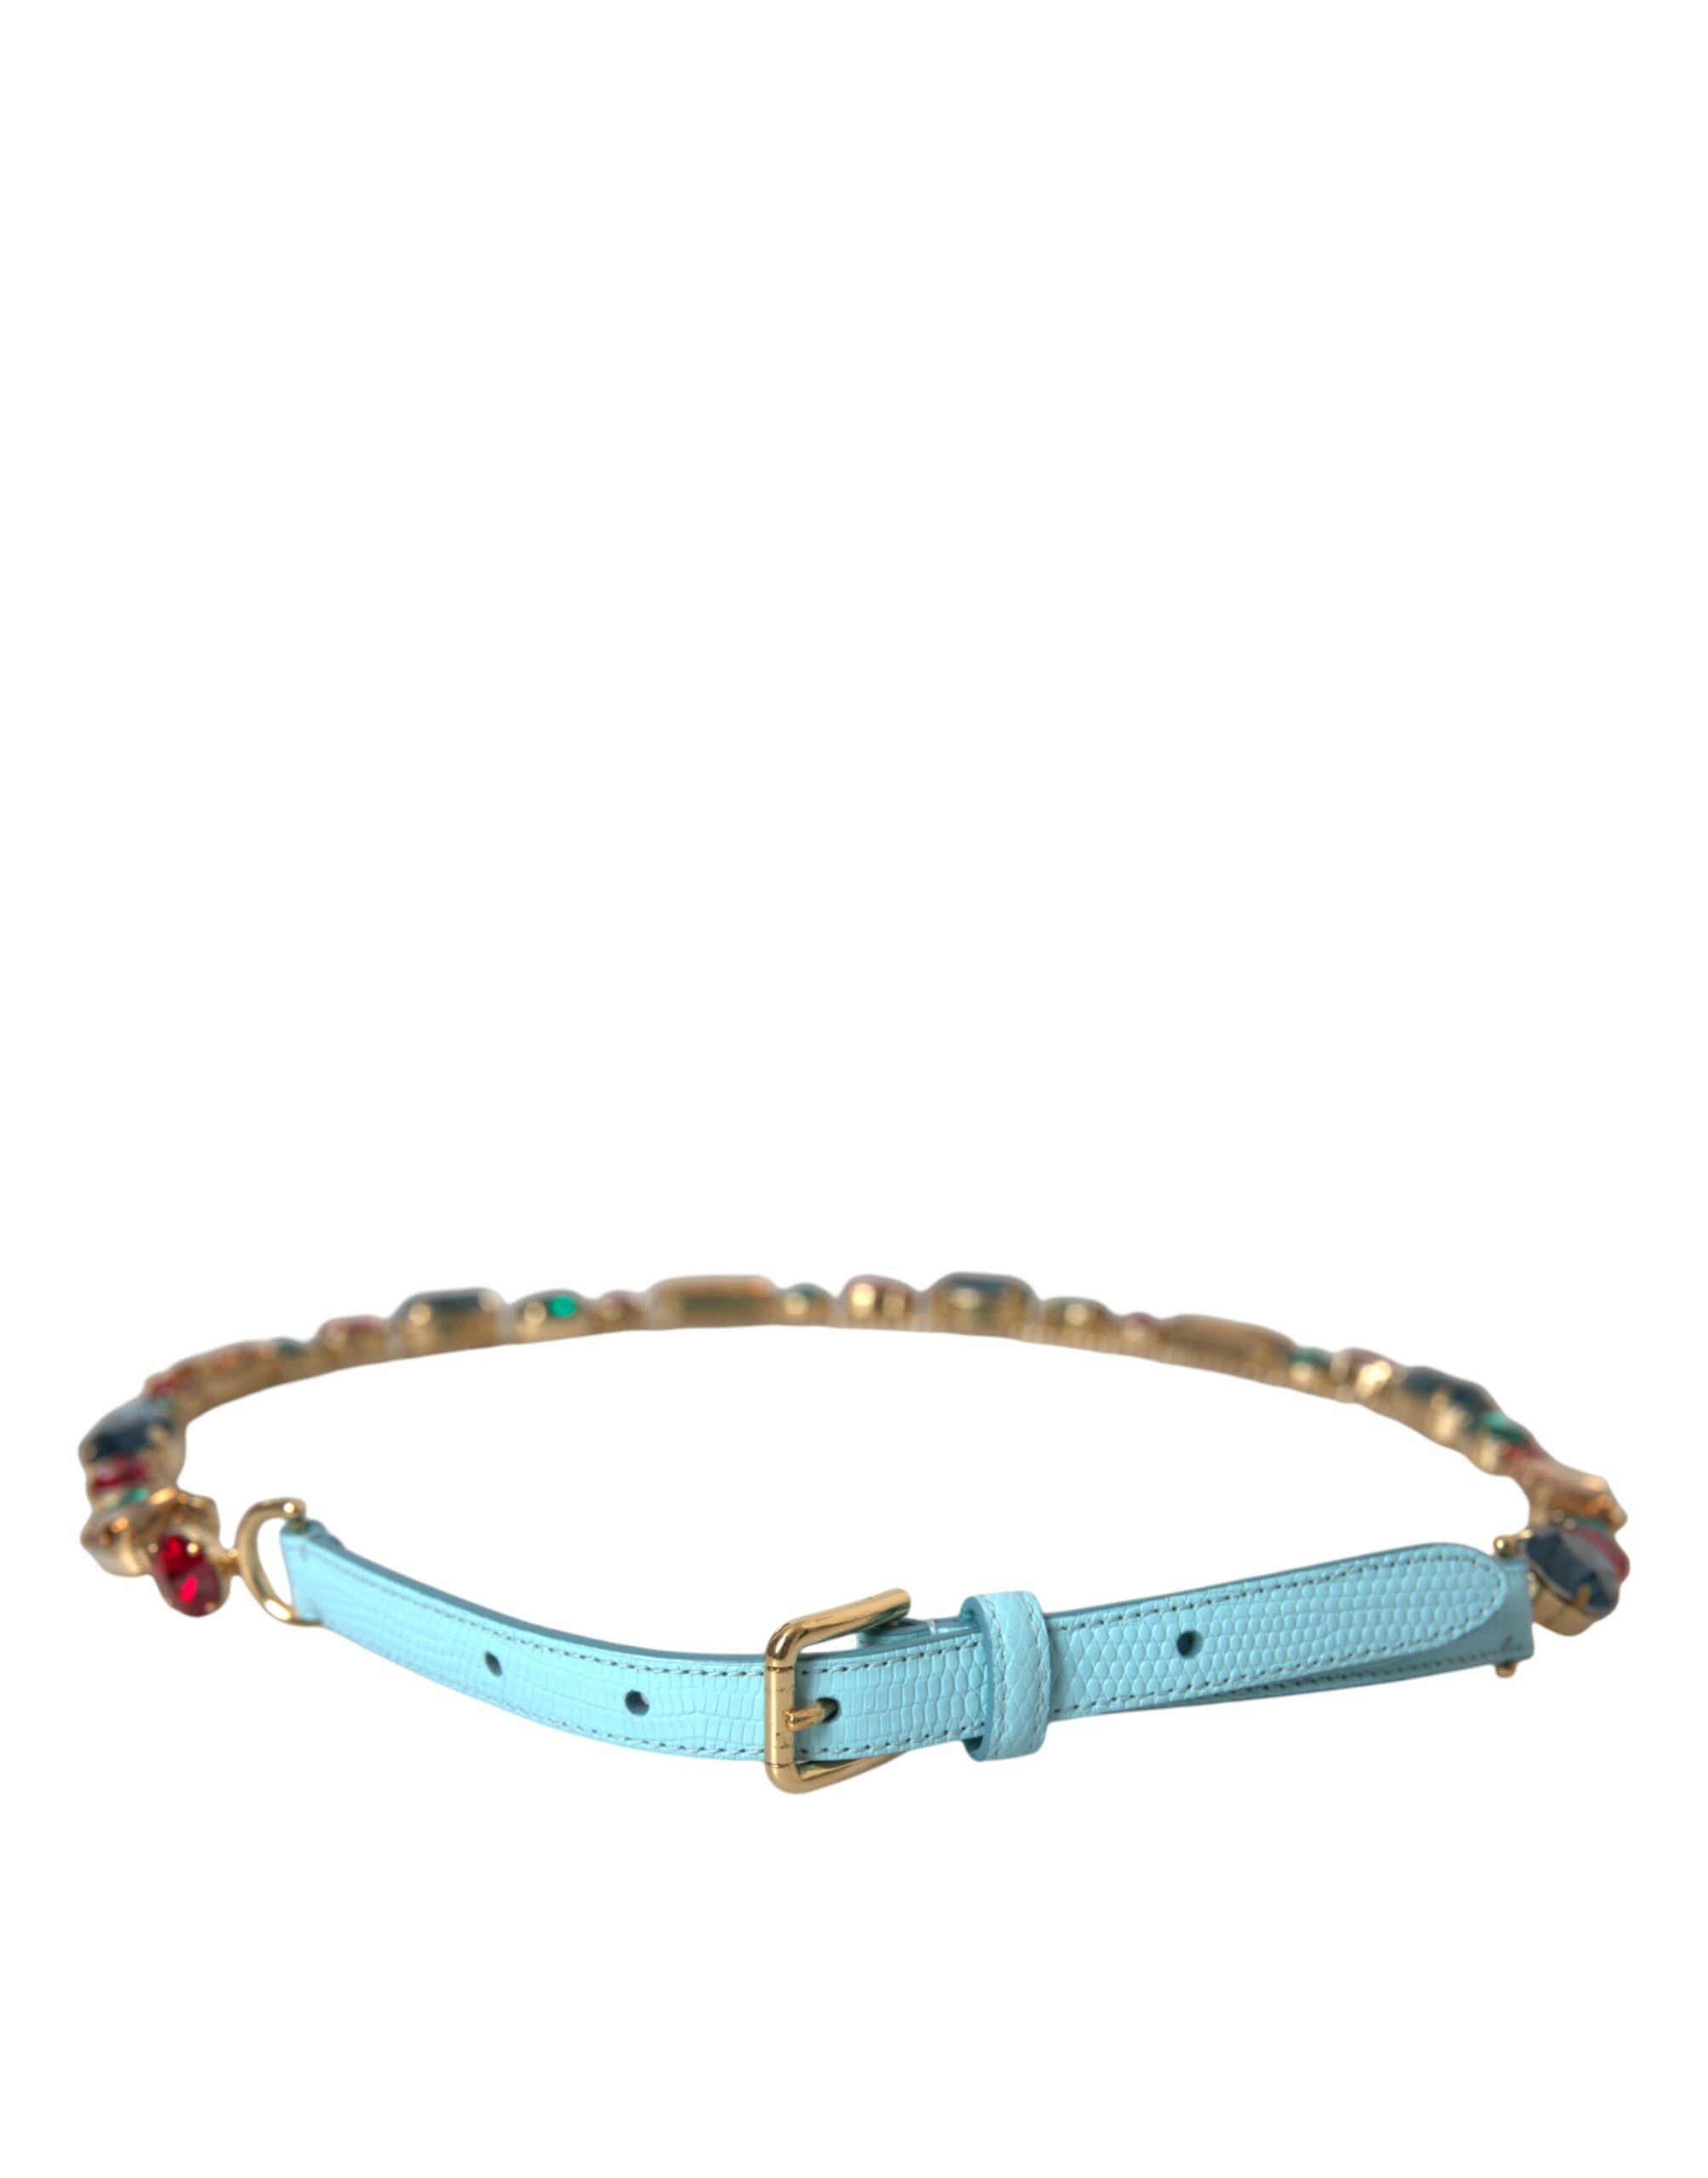 Light Blue Dolce & Gabbana Light Blue Leather Crystal Chain Waist Belt 85 cm / 34 Inches